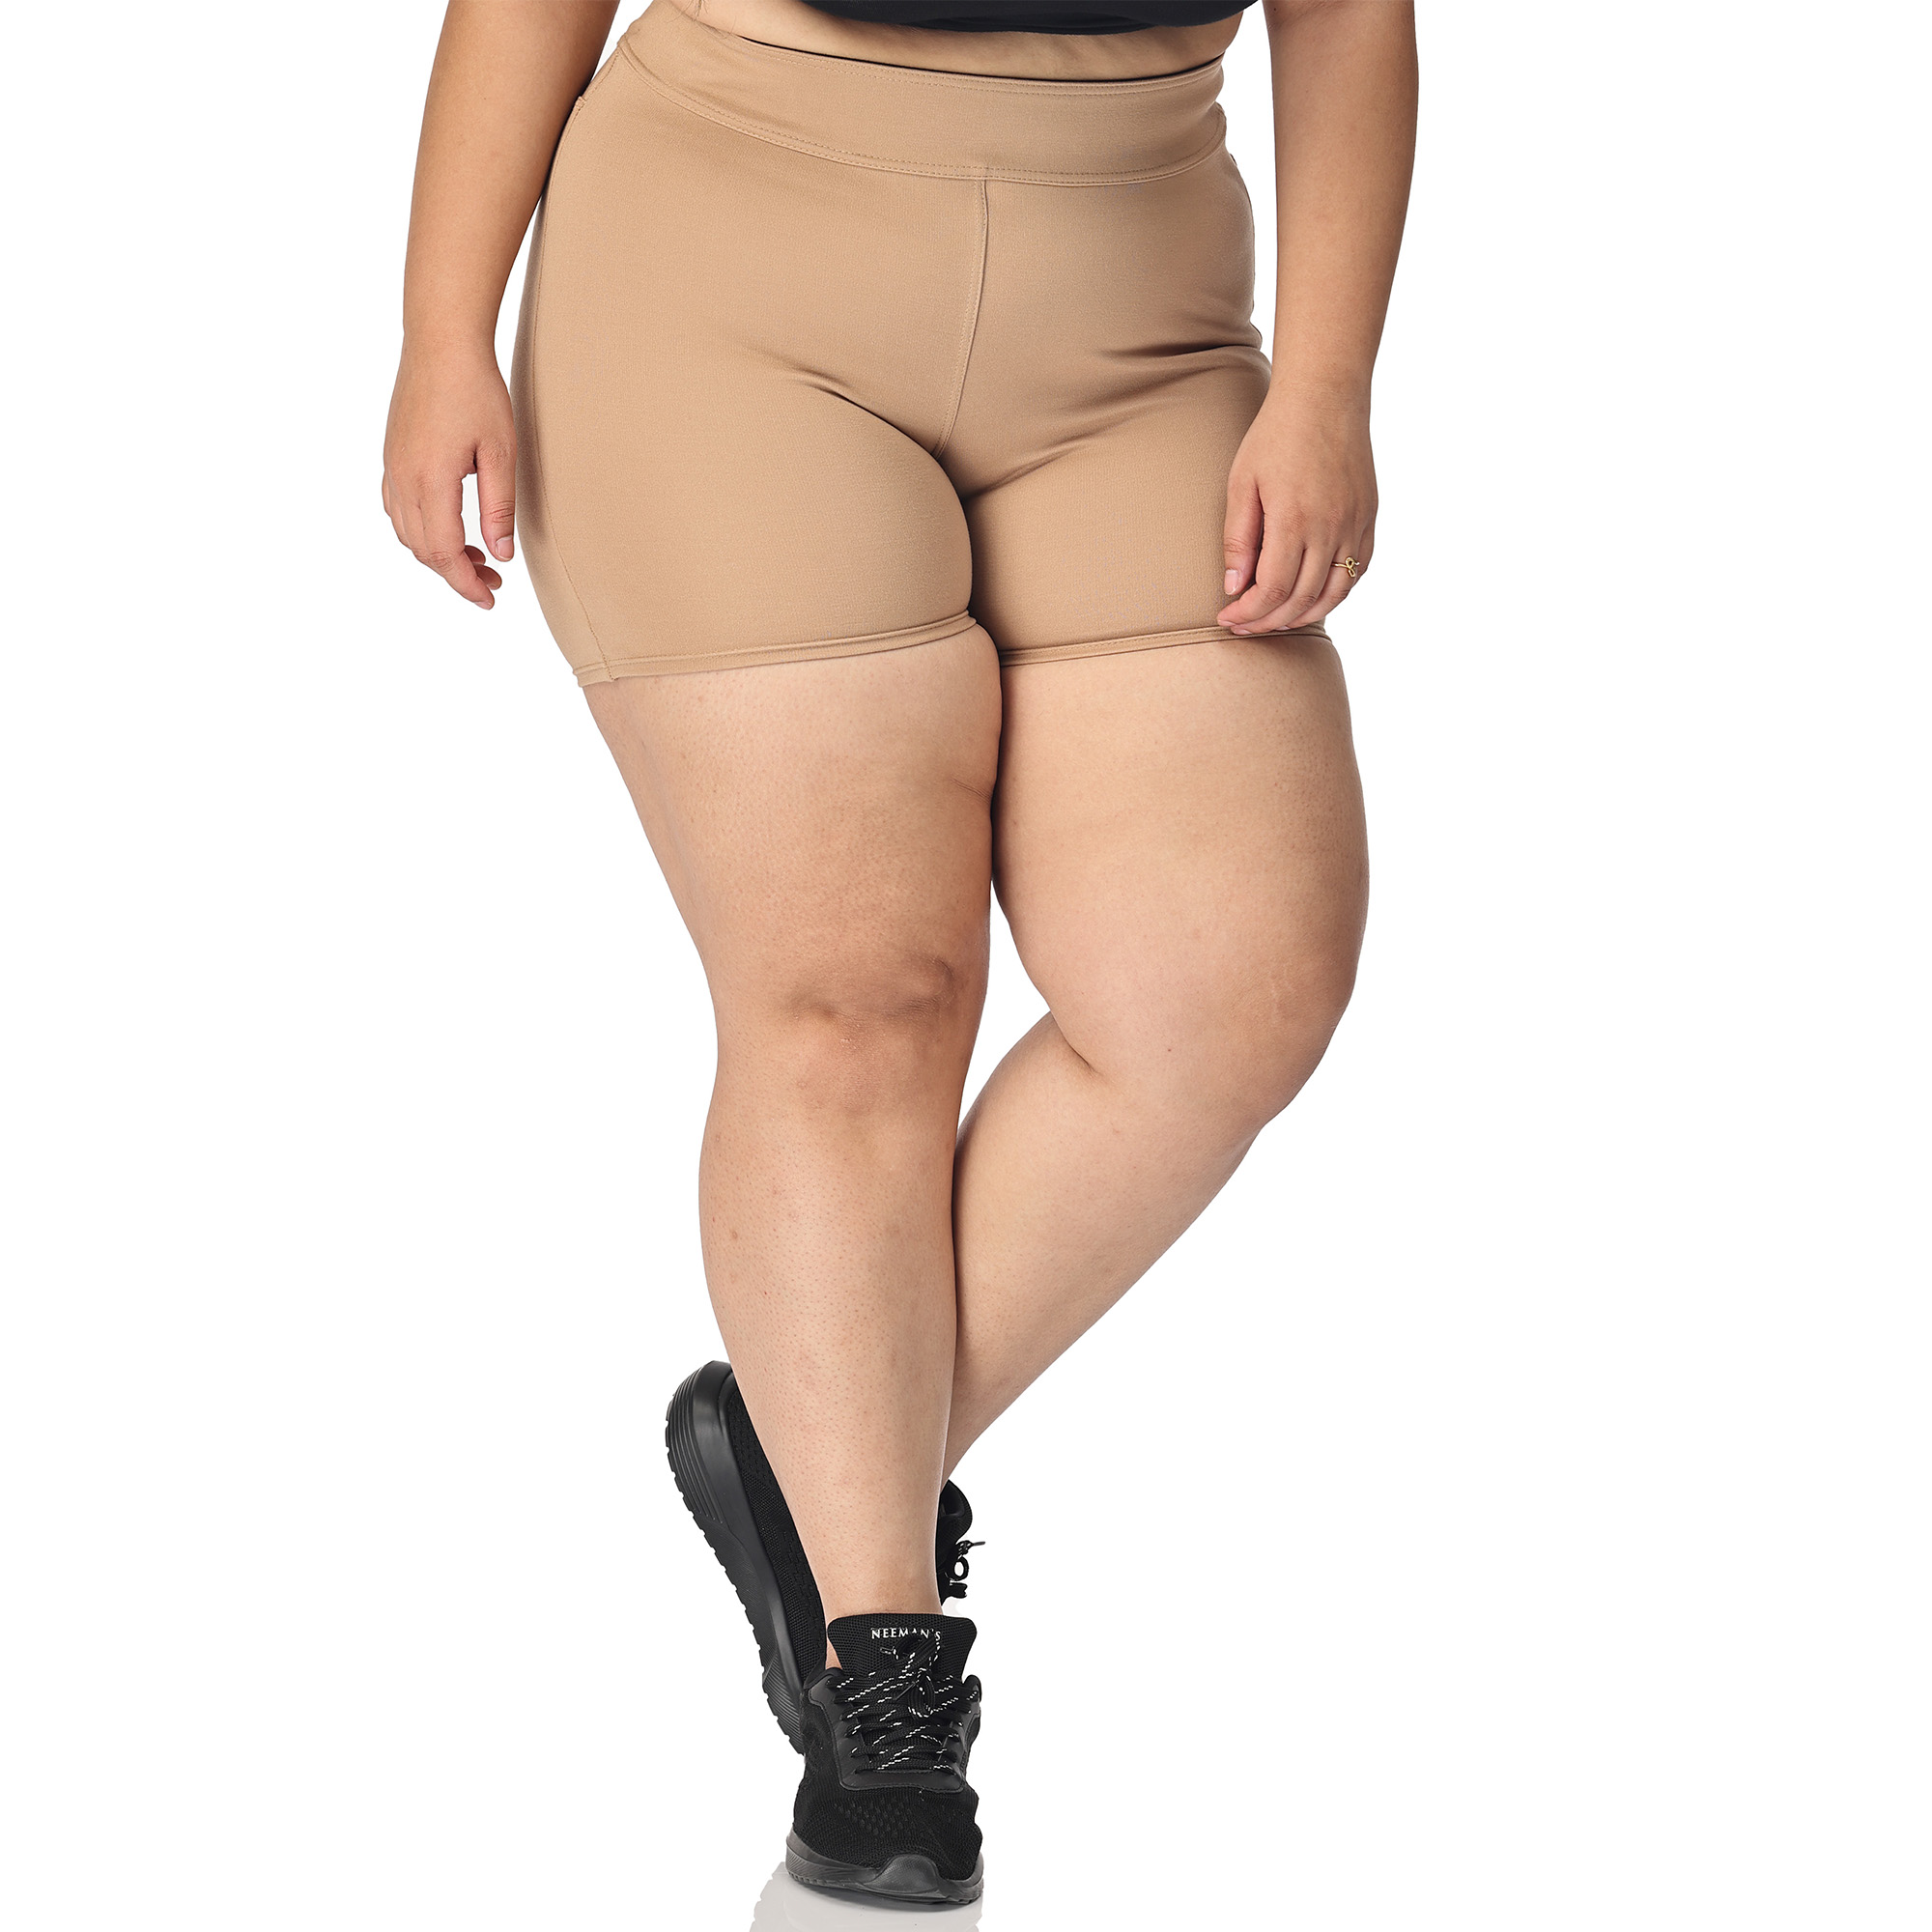 Khaki shorts women - Plus size active shape wear-2 back pockets